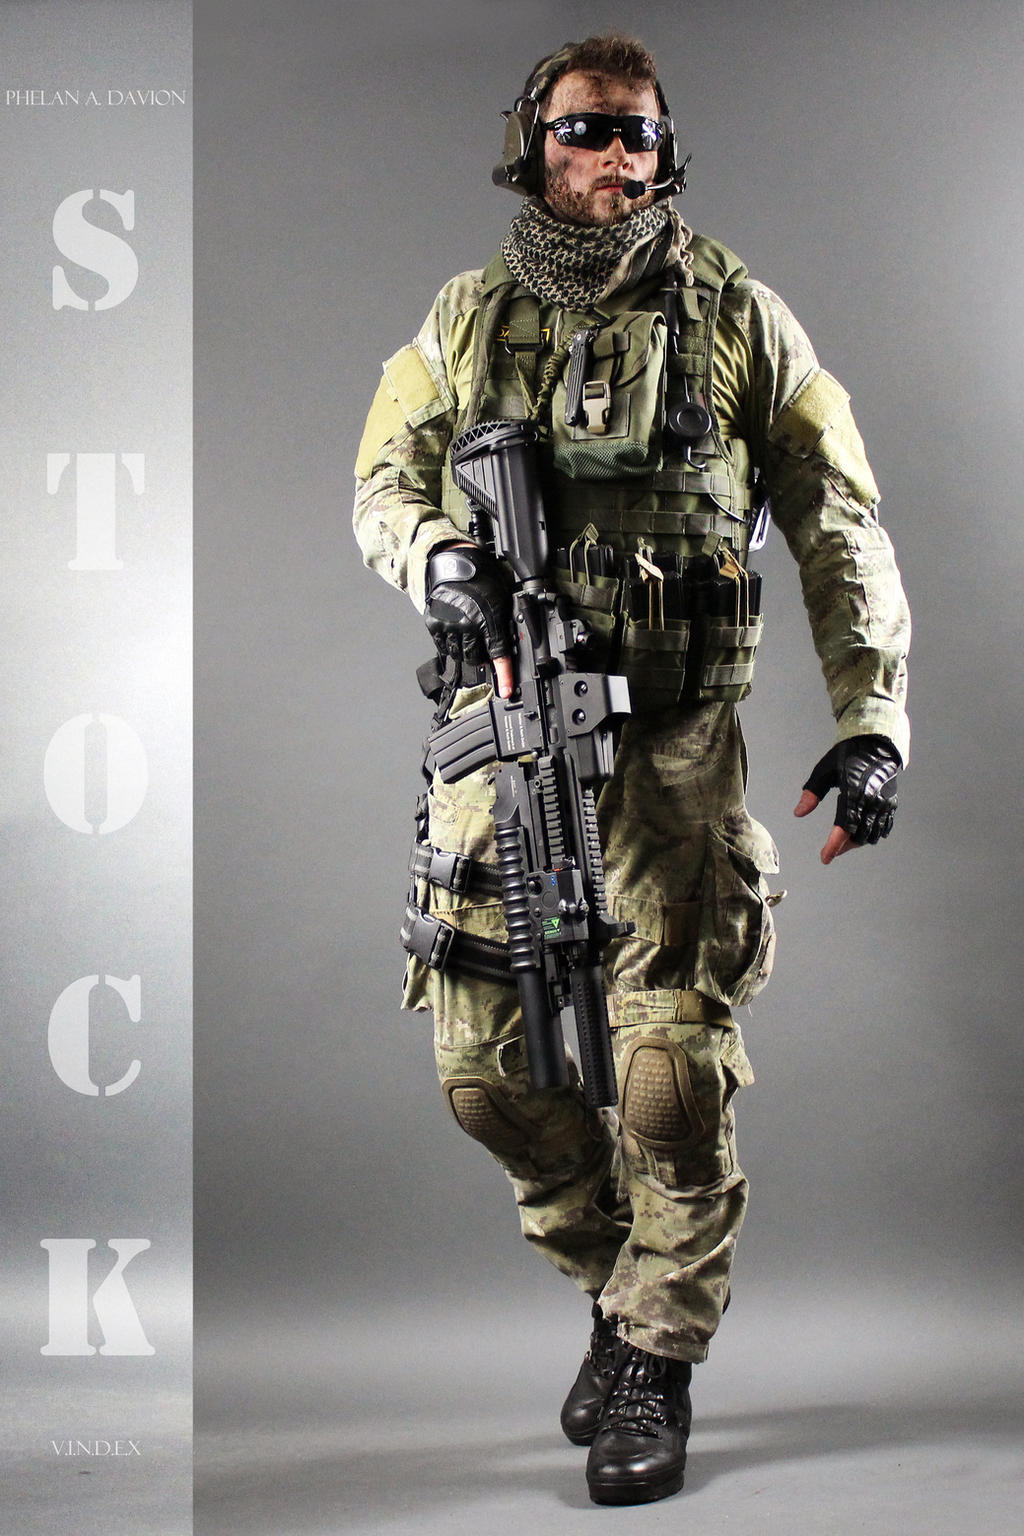 Combat Soldier STOCK VIII by PhelanDavion on DeviantArt